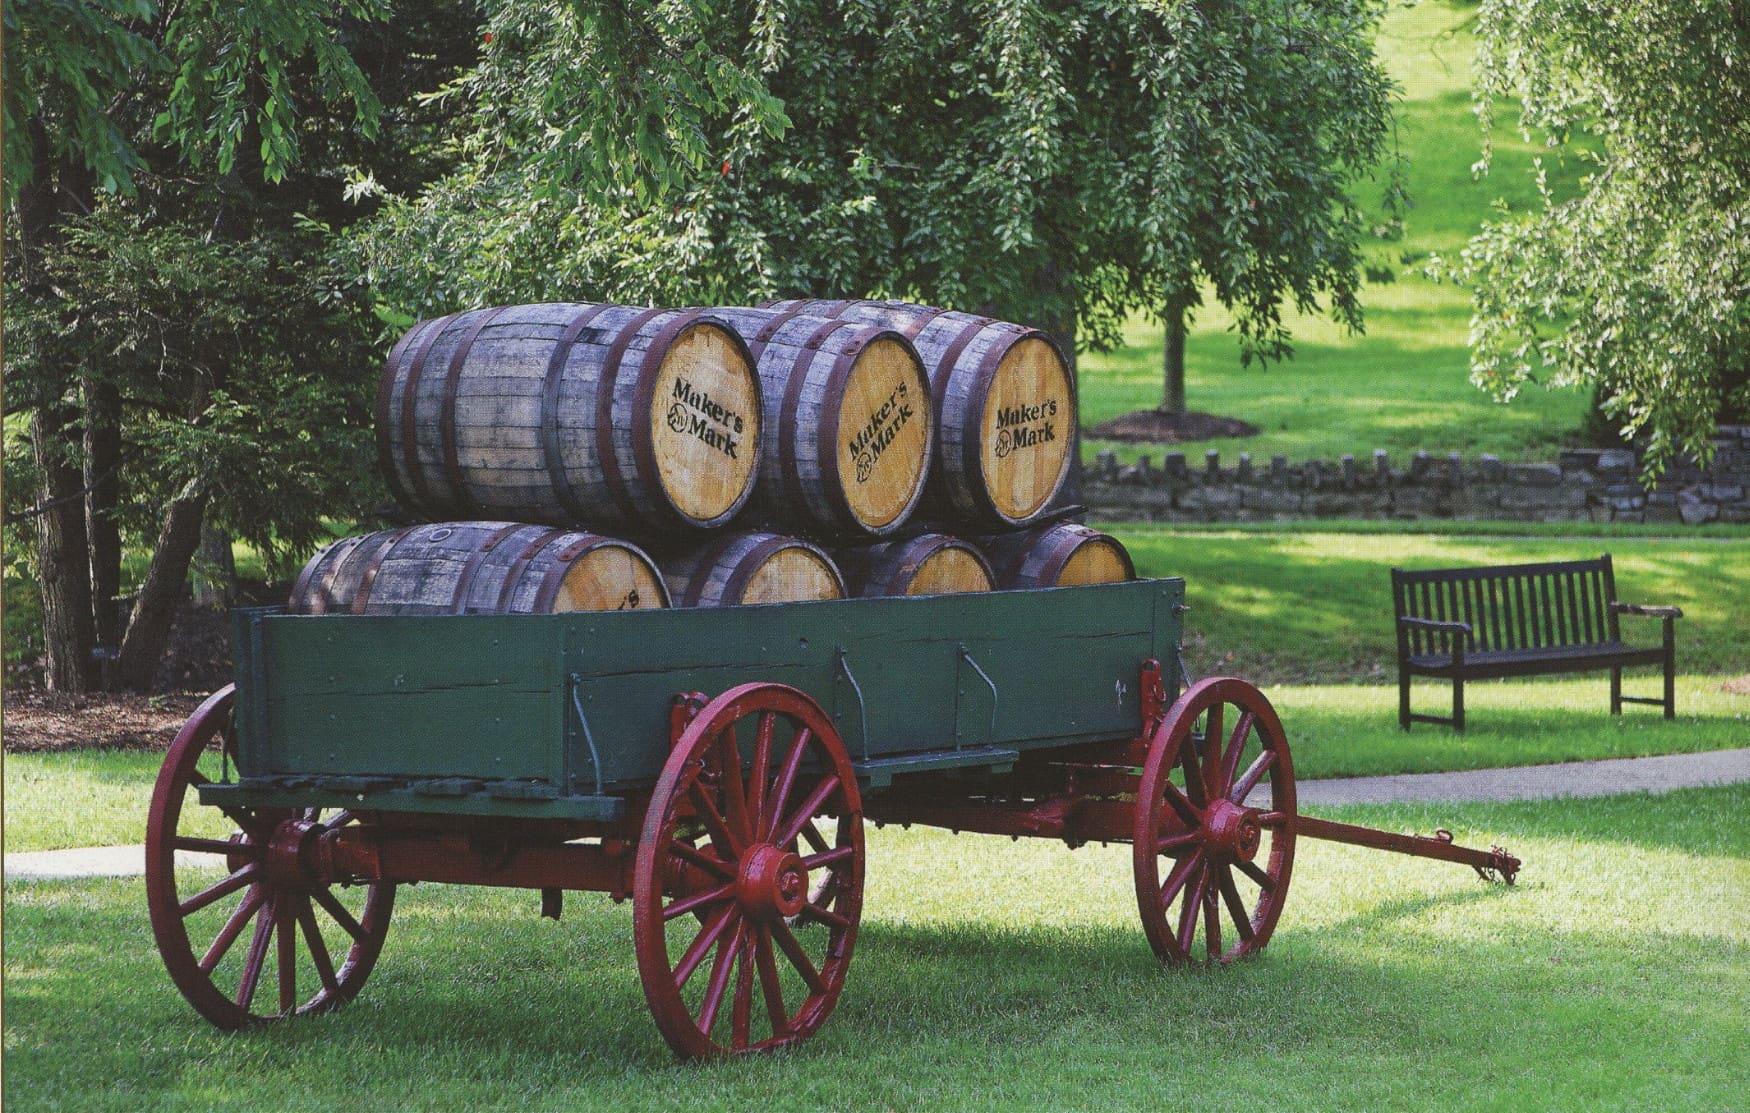 Maker's Mark bourbon wagon